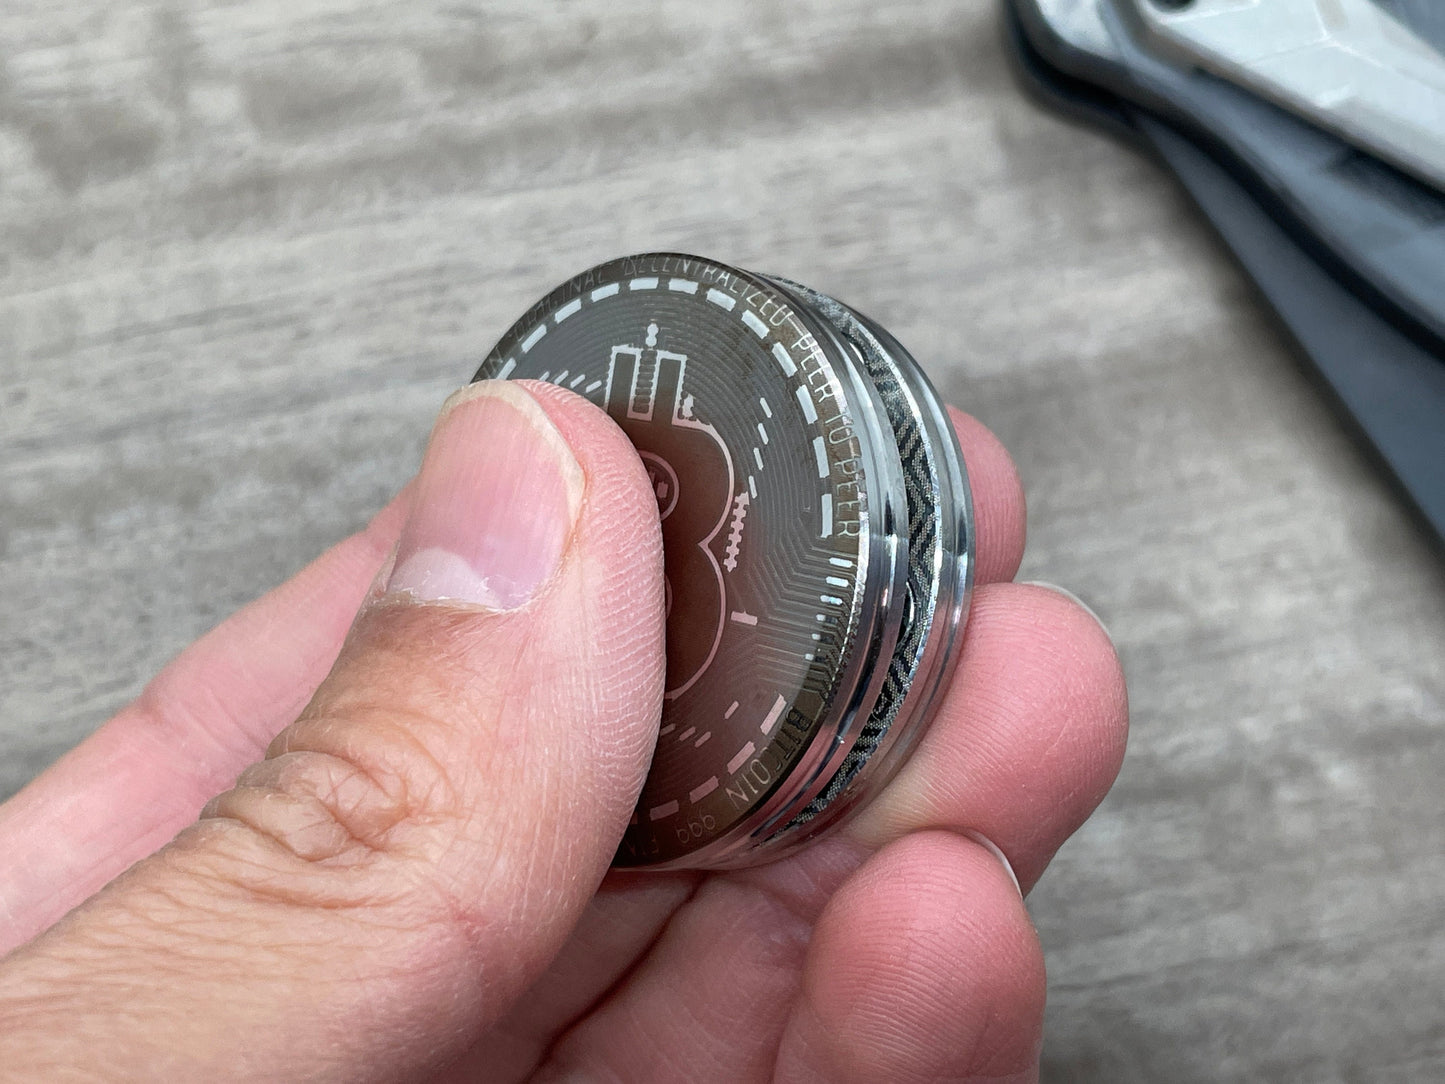 BITCOIN HAPTIC Coins CLICKY Stainless Steel Haptic Slider Fidget